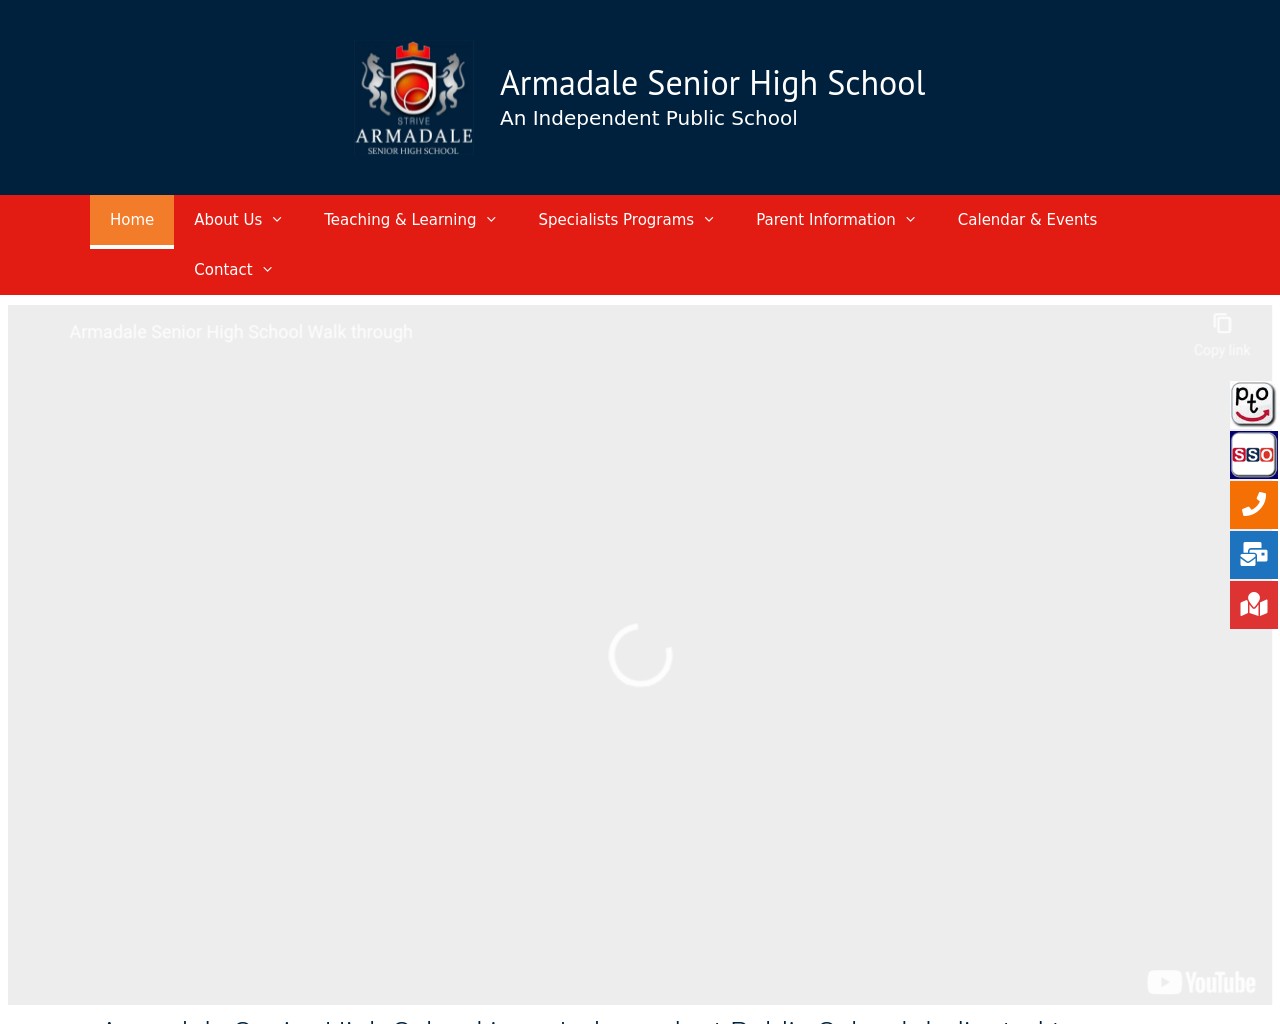 Armadale Senior High School